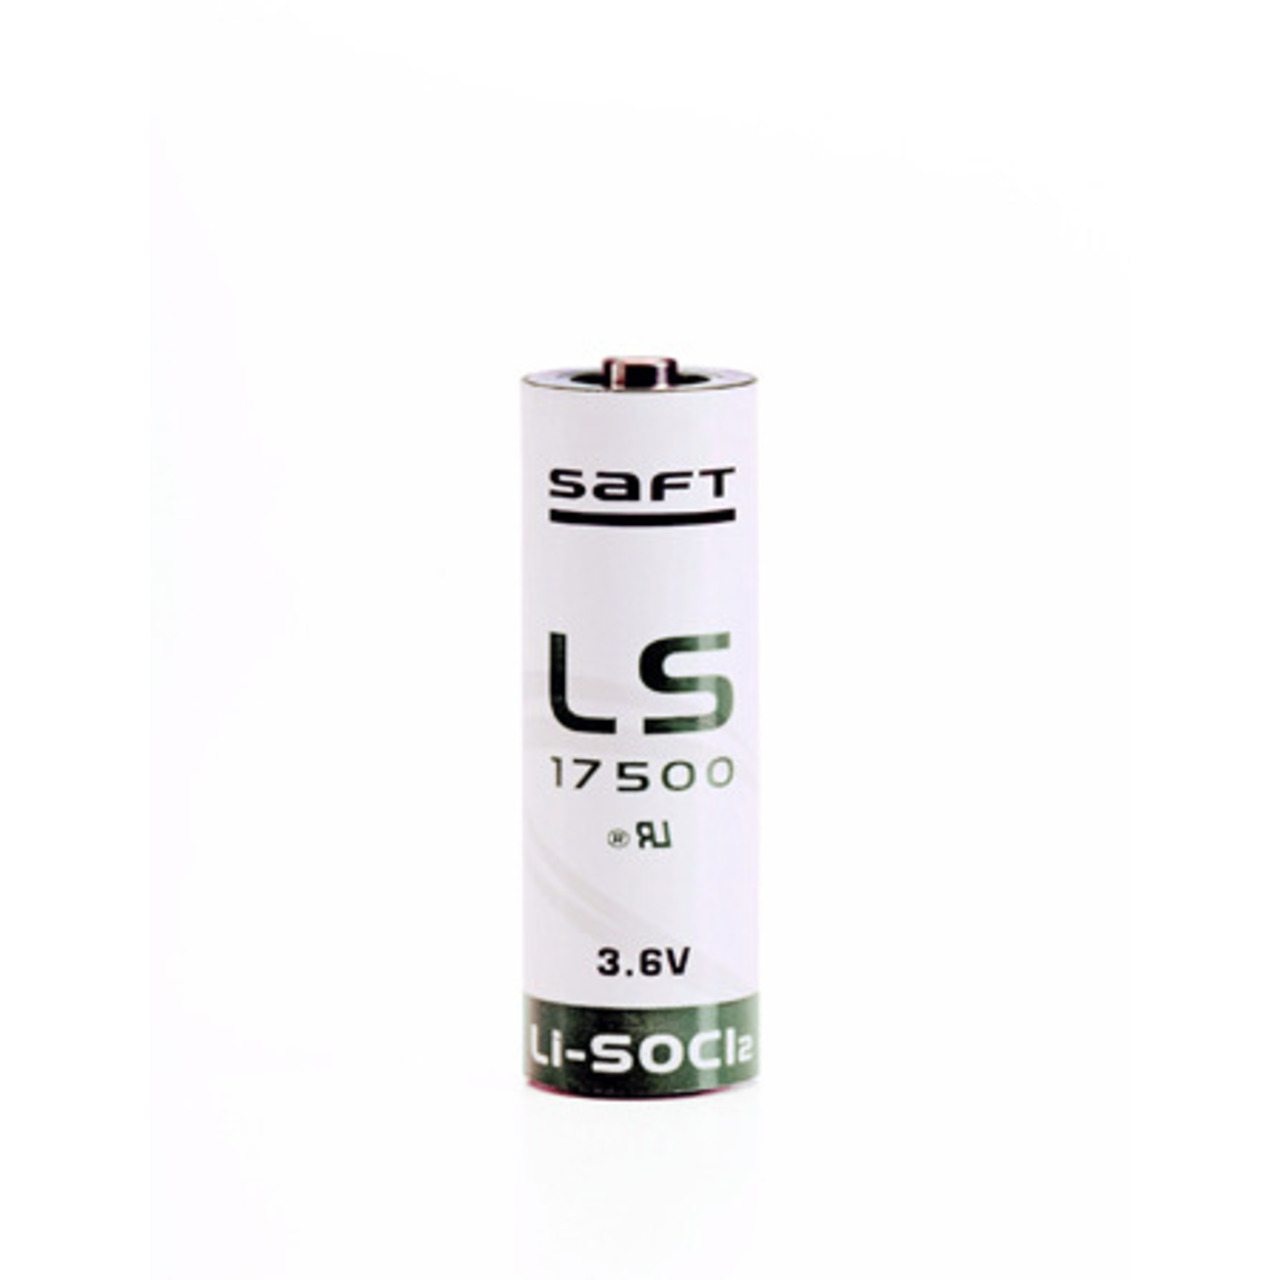 Saft Lithium Batterie LS-17500- Typ A- 3-6 V- 3600 mAh